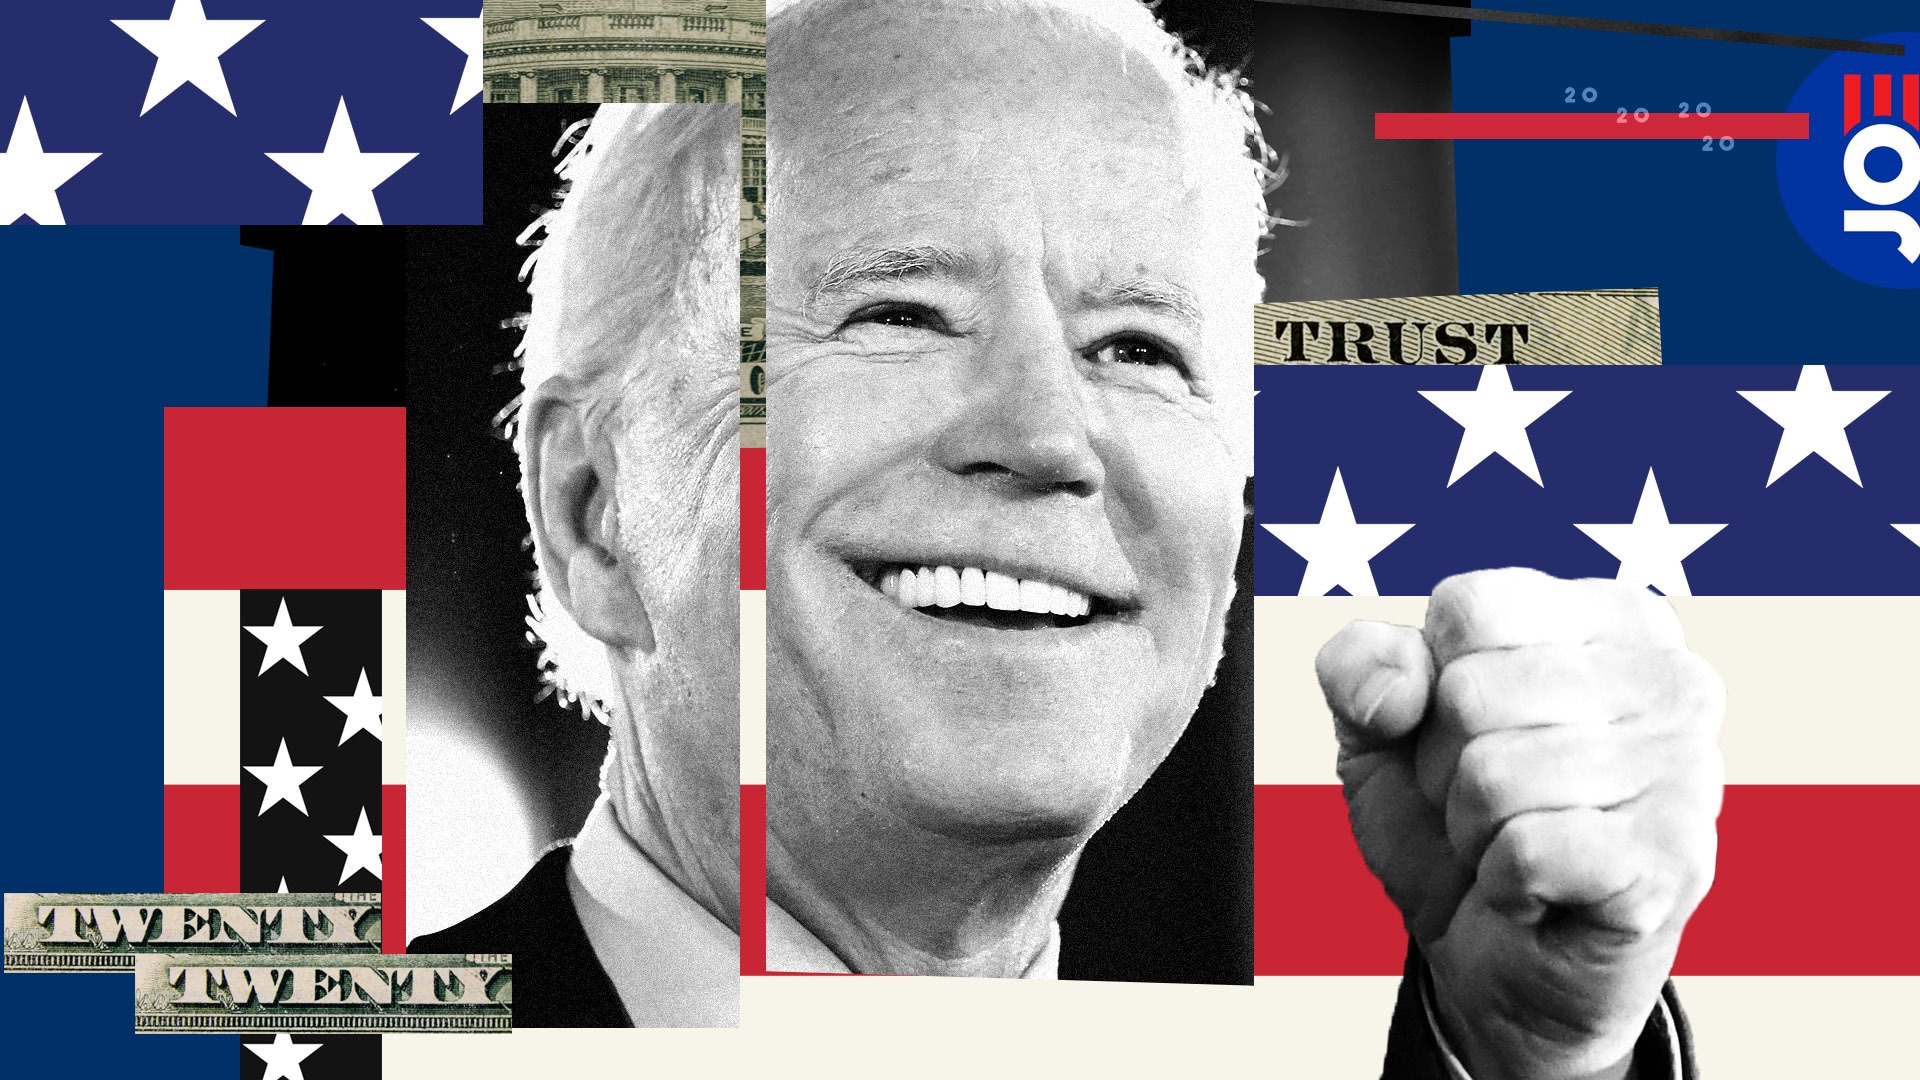 Us president Joe Biden in front of a US flag